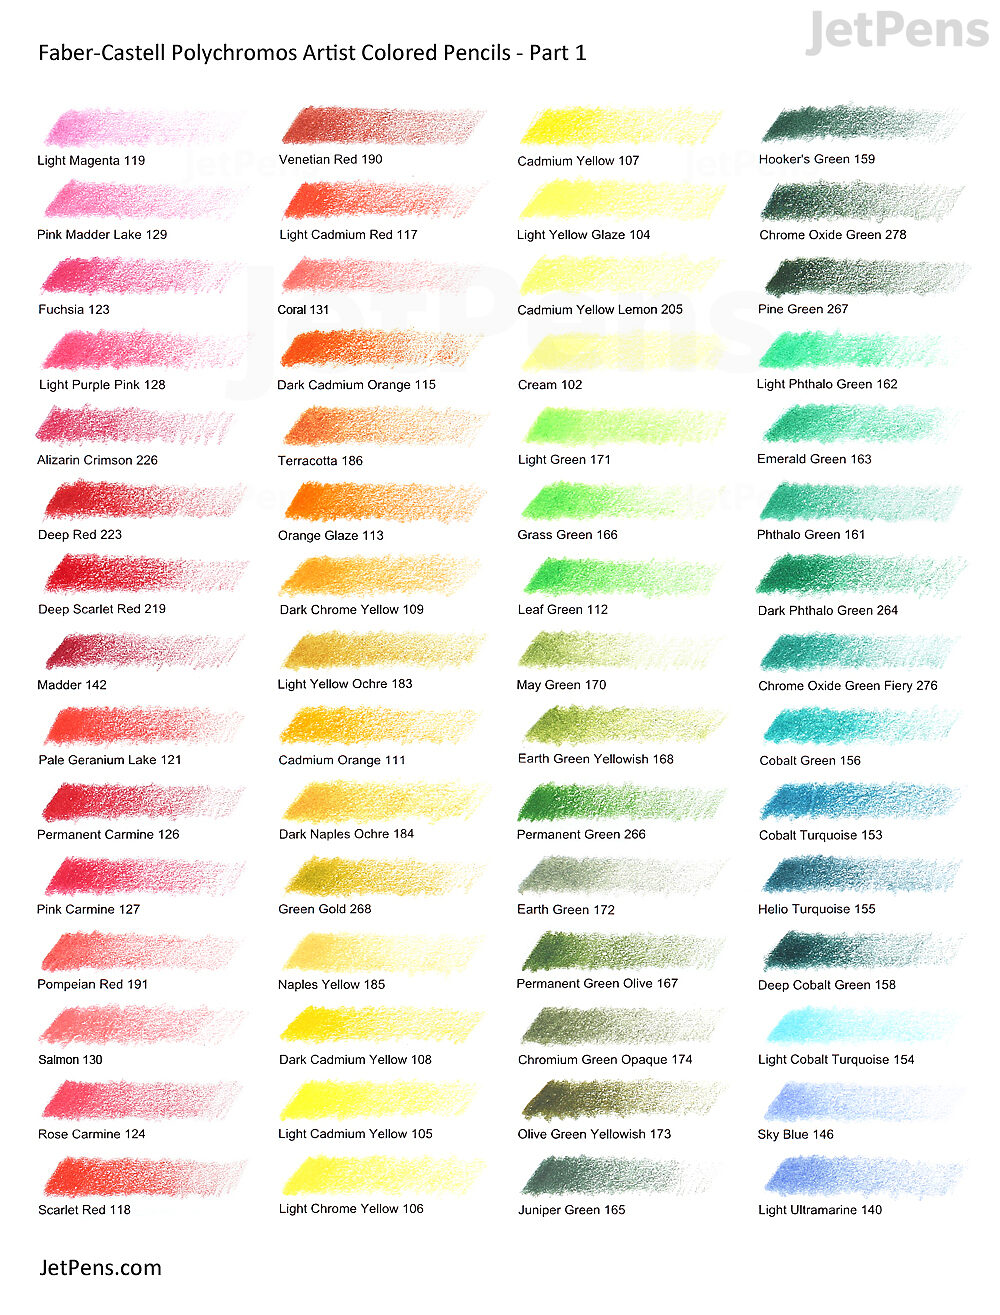 Faber-Castell Polychromos Artists' Color Pencil Ivory 103